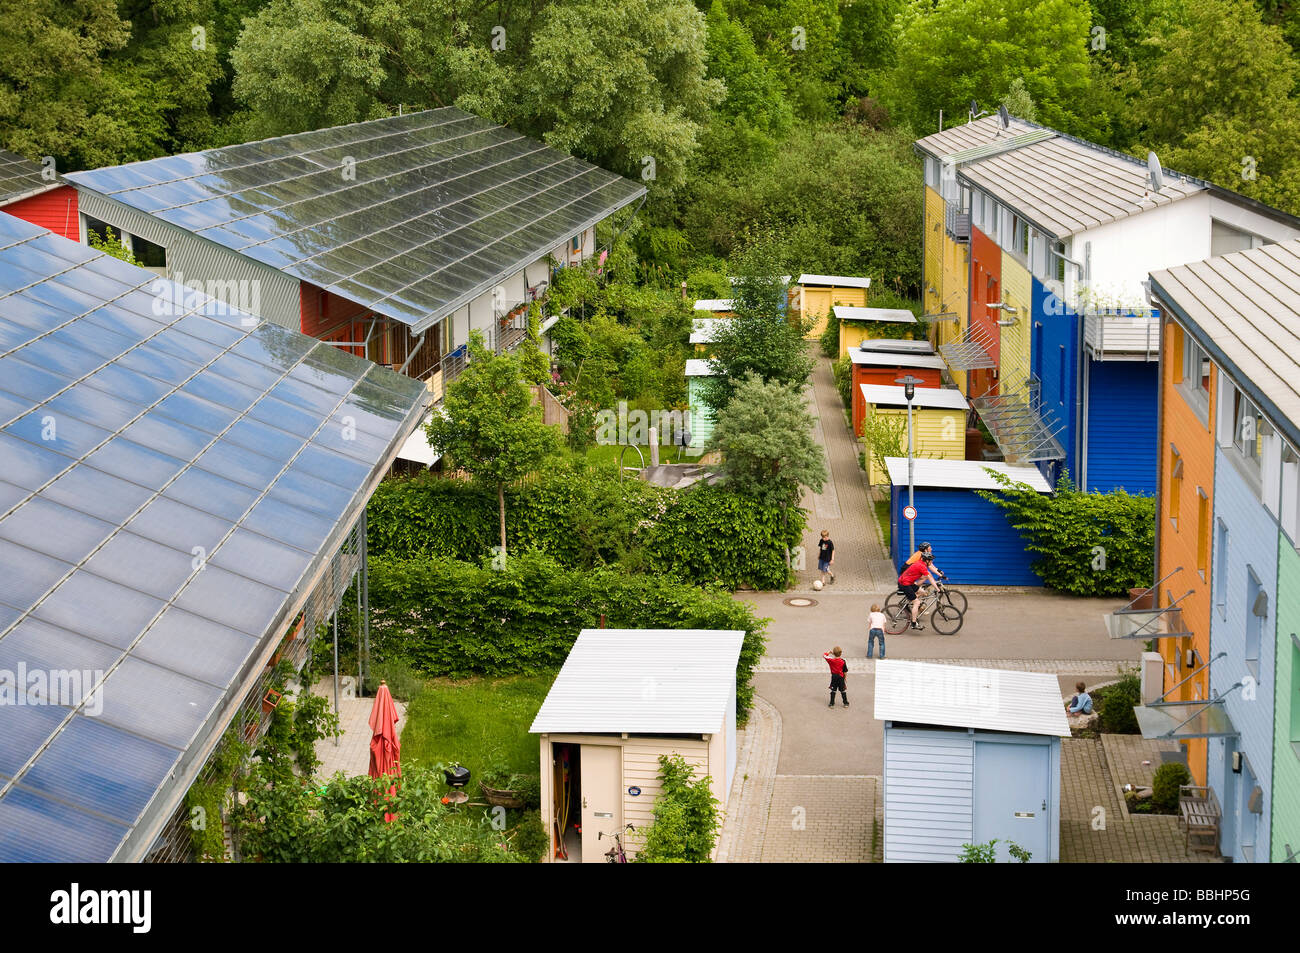 Solar roofs of the Solarsiedlung solar settlement, Vauban, Freiburg, Baden-Wuerttemberg, Germany, Europe Stock Photo